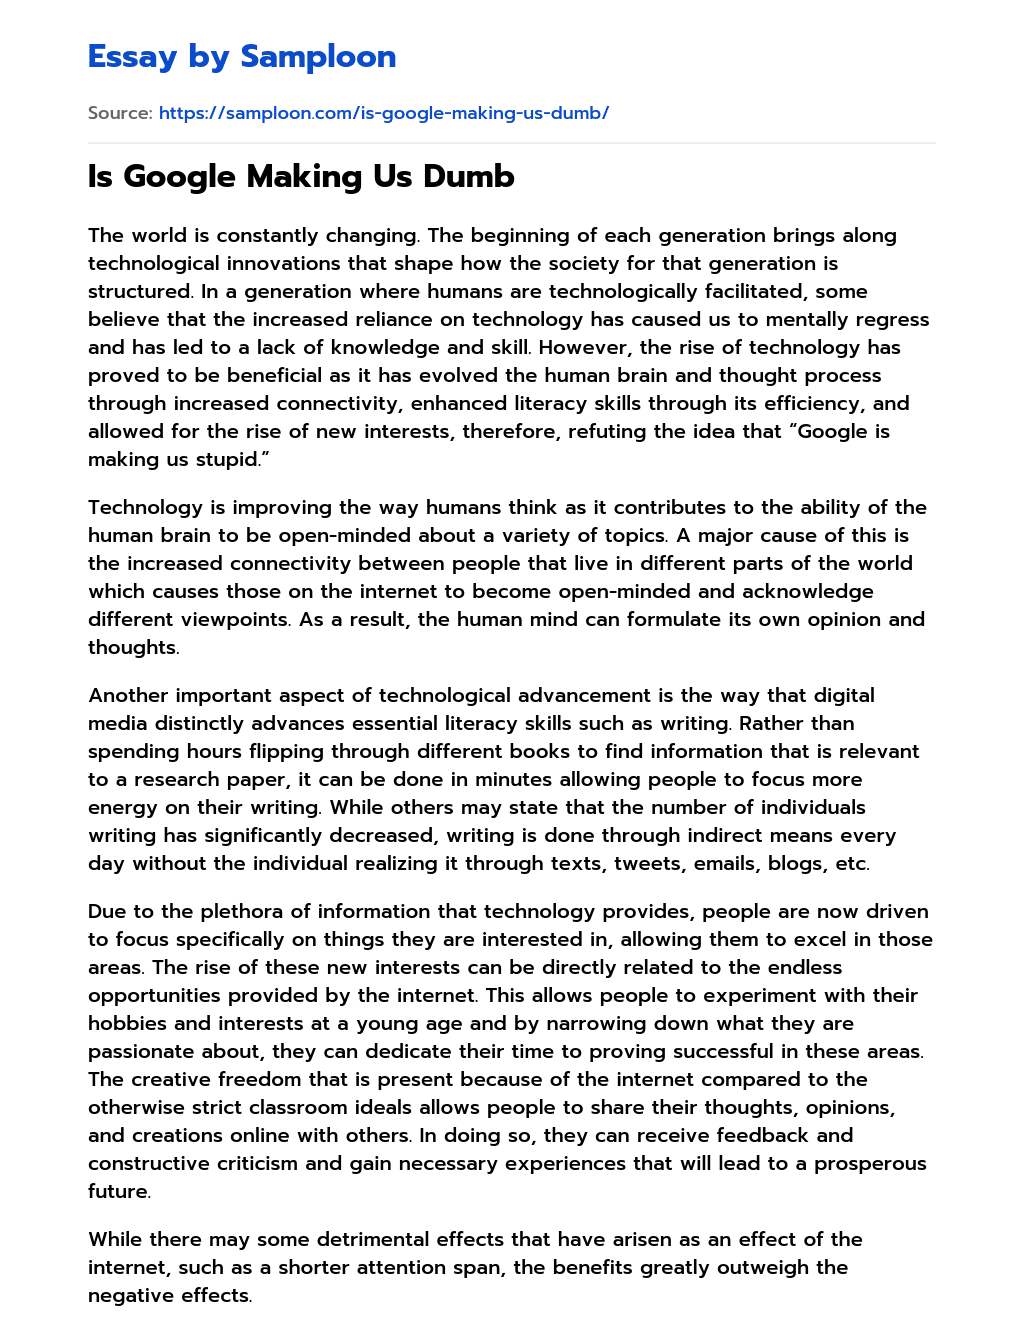 Is Google Making Us Dumb essay